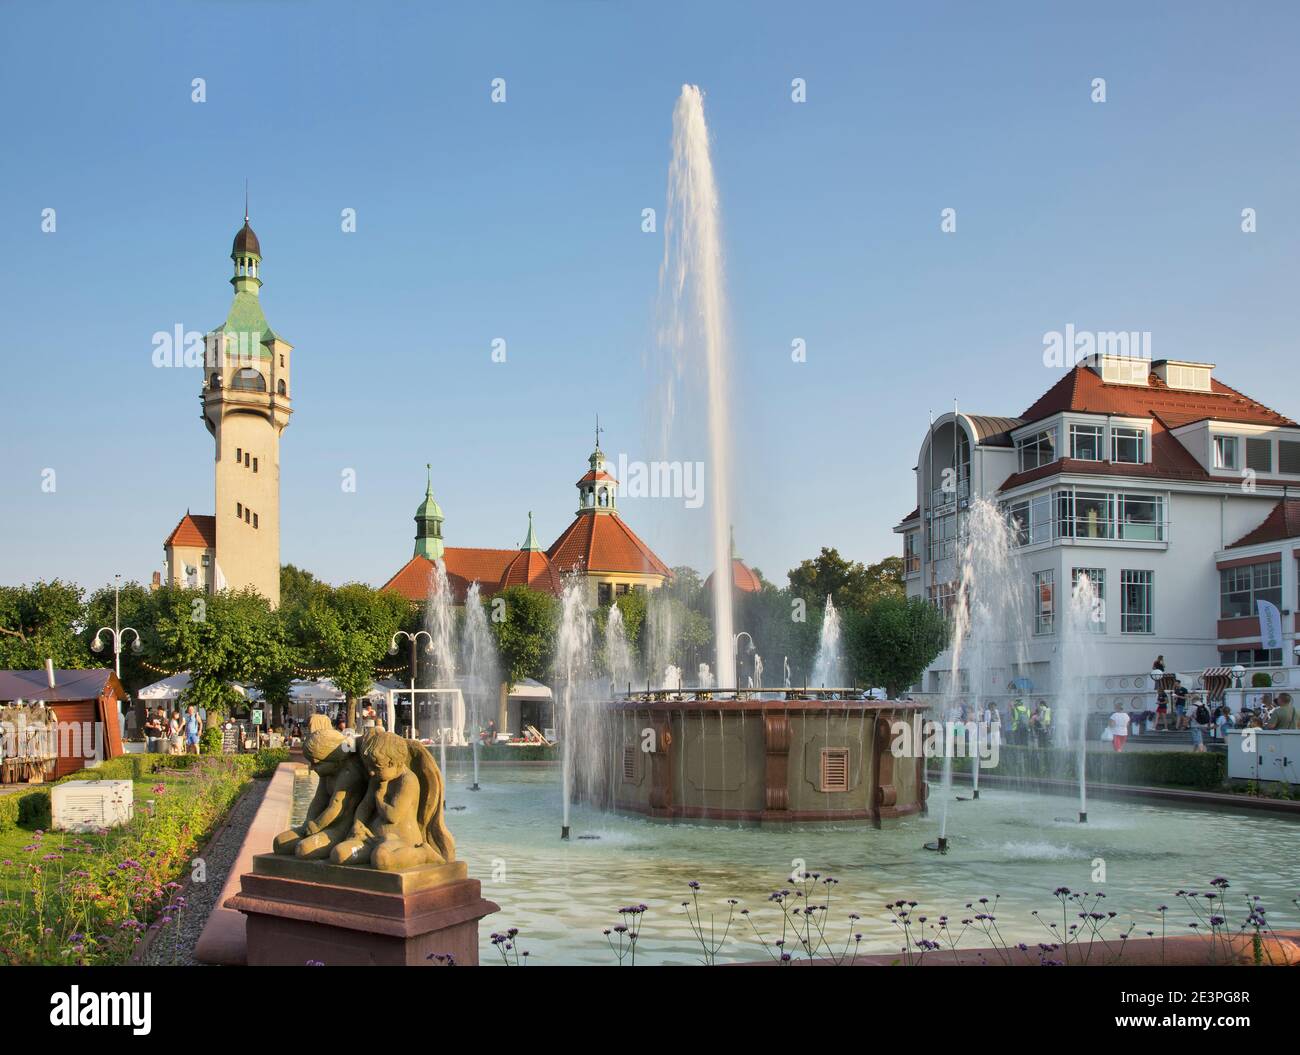 Resort square (Plac Zdrojowy) in Sopot. Poland Stock Photo